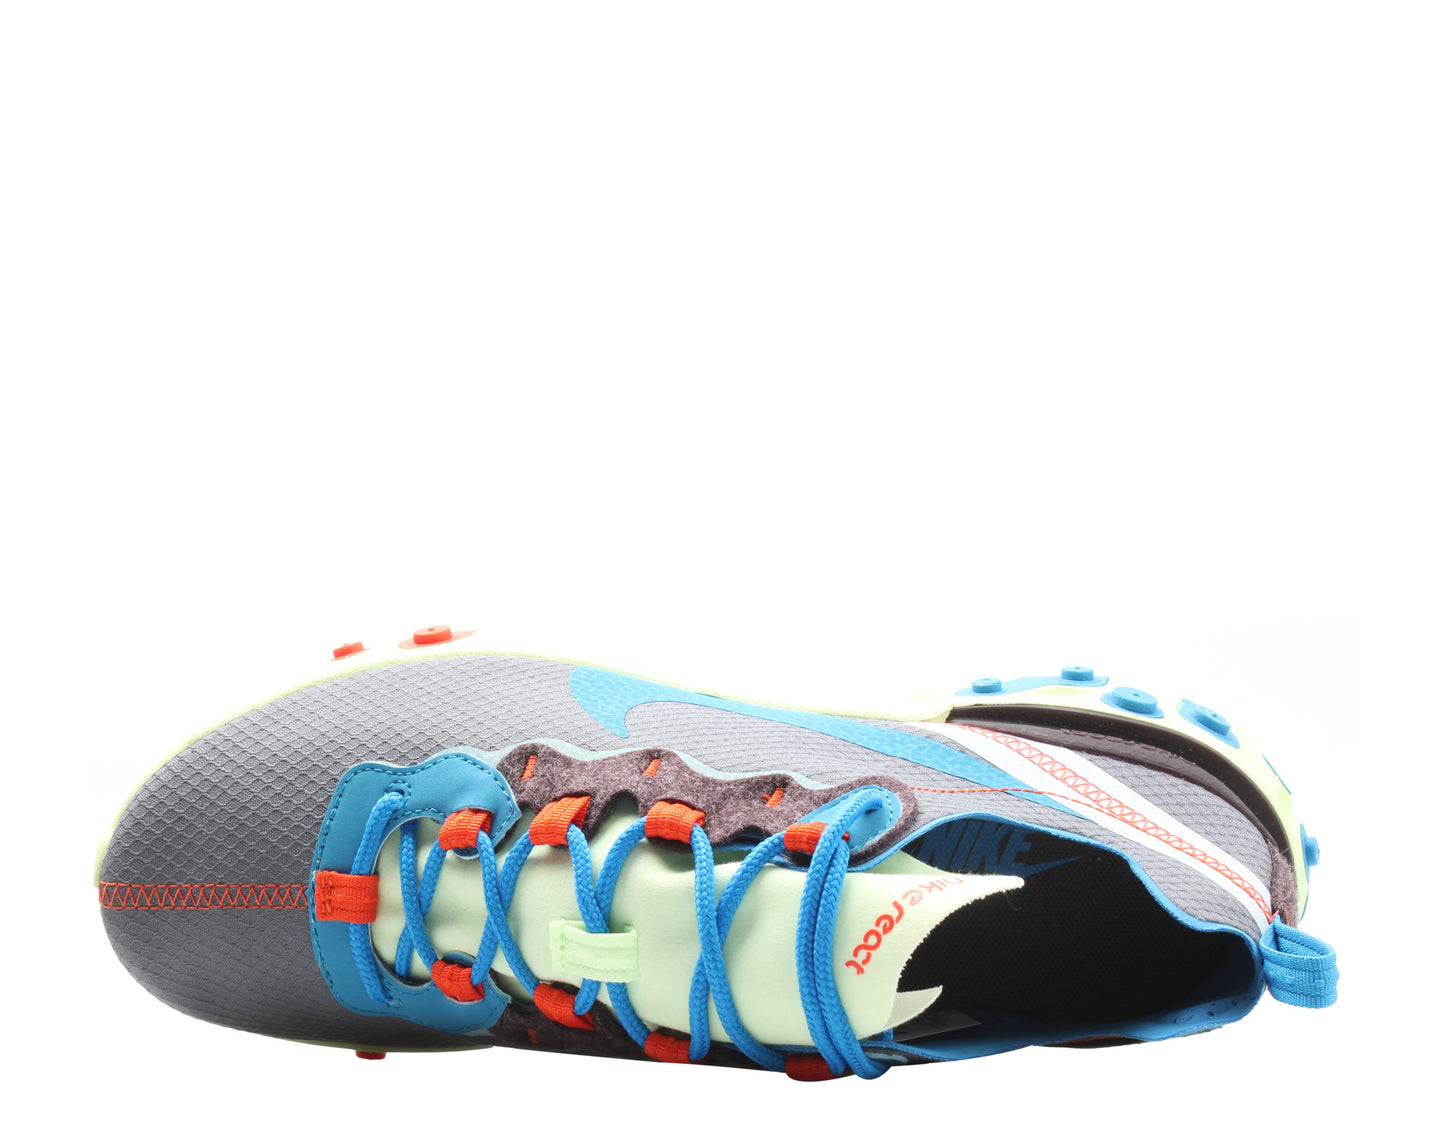 Nike React Element 55 SE Volt/Blue-Dark Grey Men's Running Shoes CT1142-700